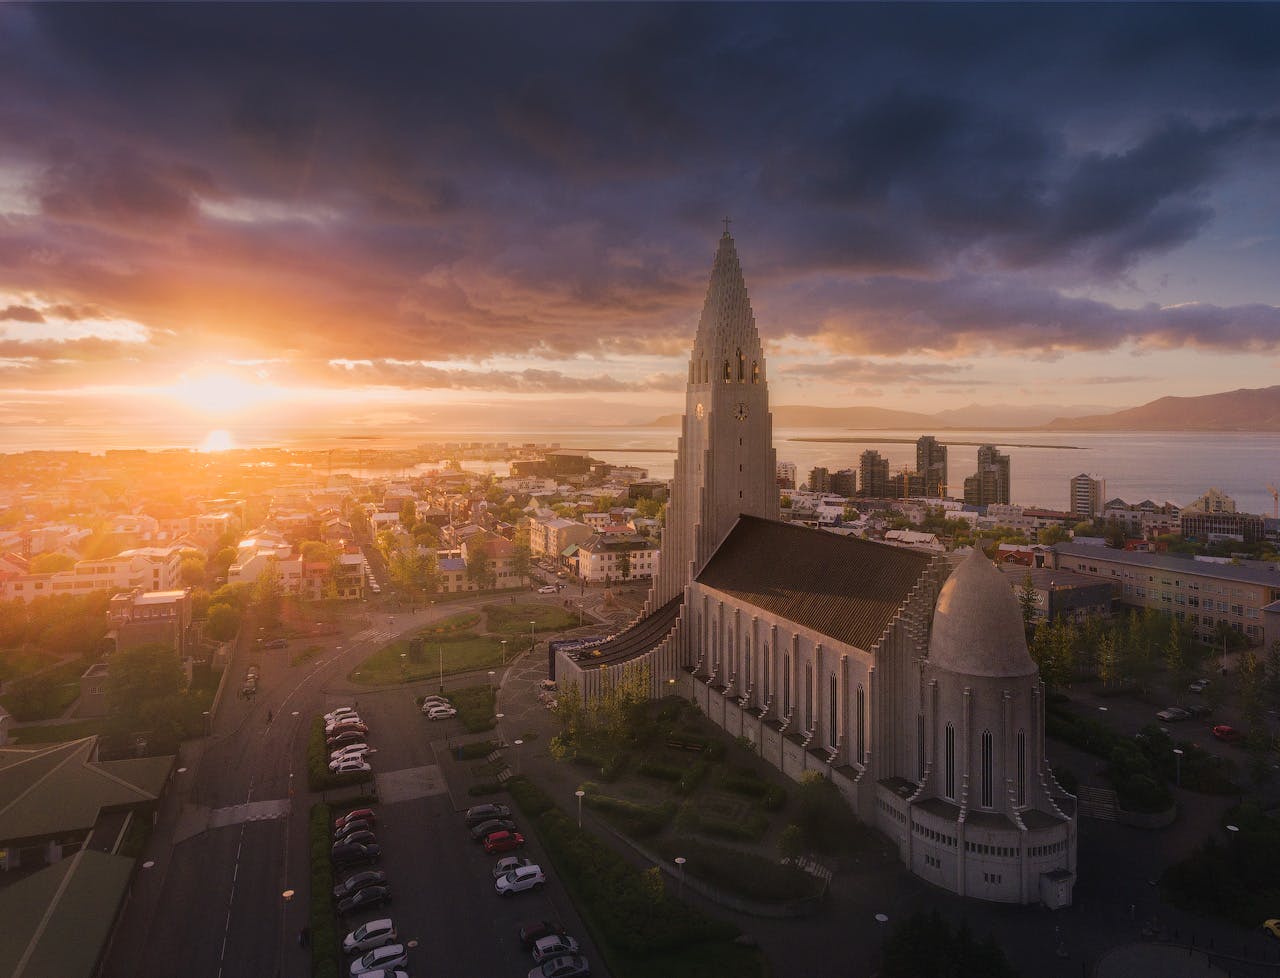 Hallgrimskirkja church is the most iconic landmark in Reykjavik.